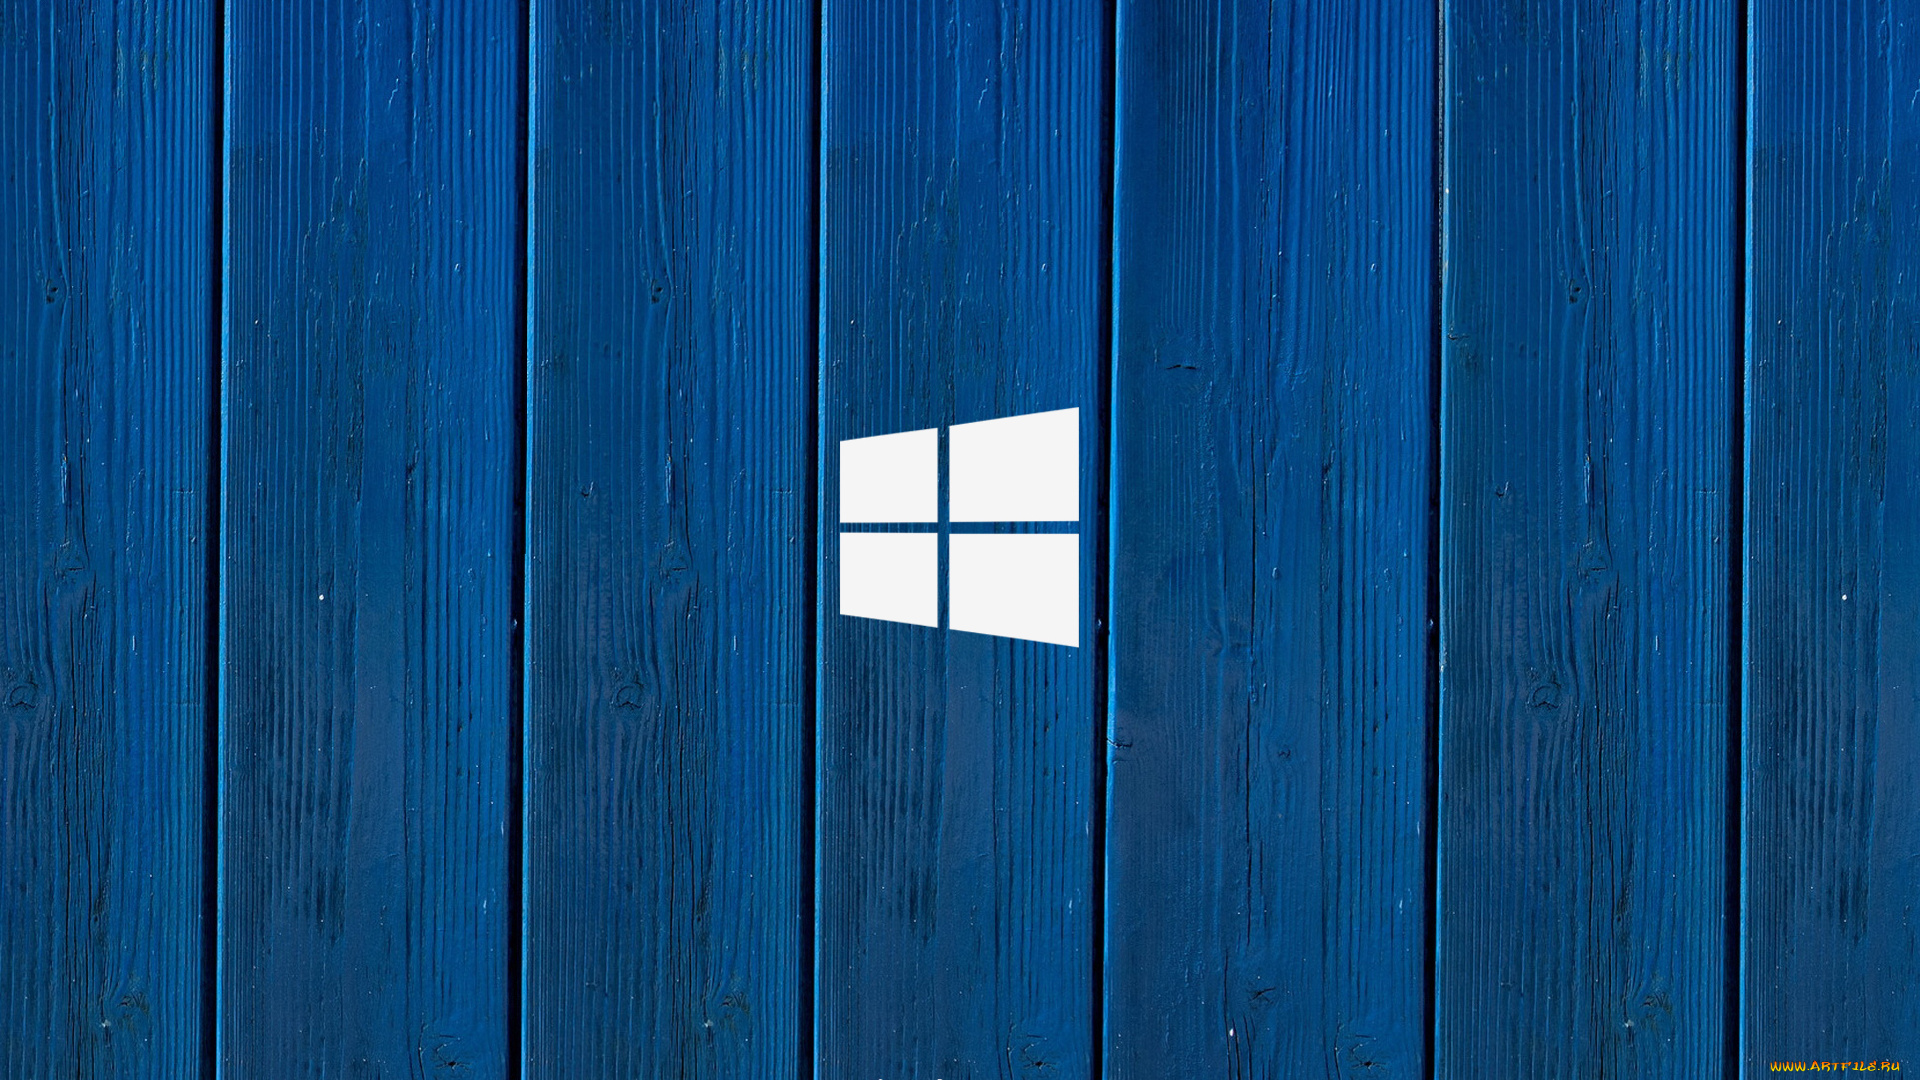 компьютеры, windows, 10, microsoft, blue, hi-tech, windows